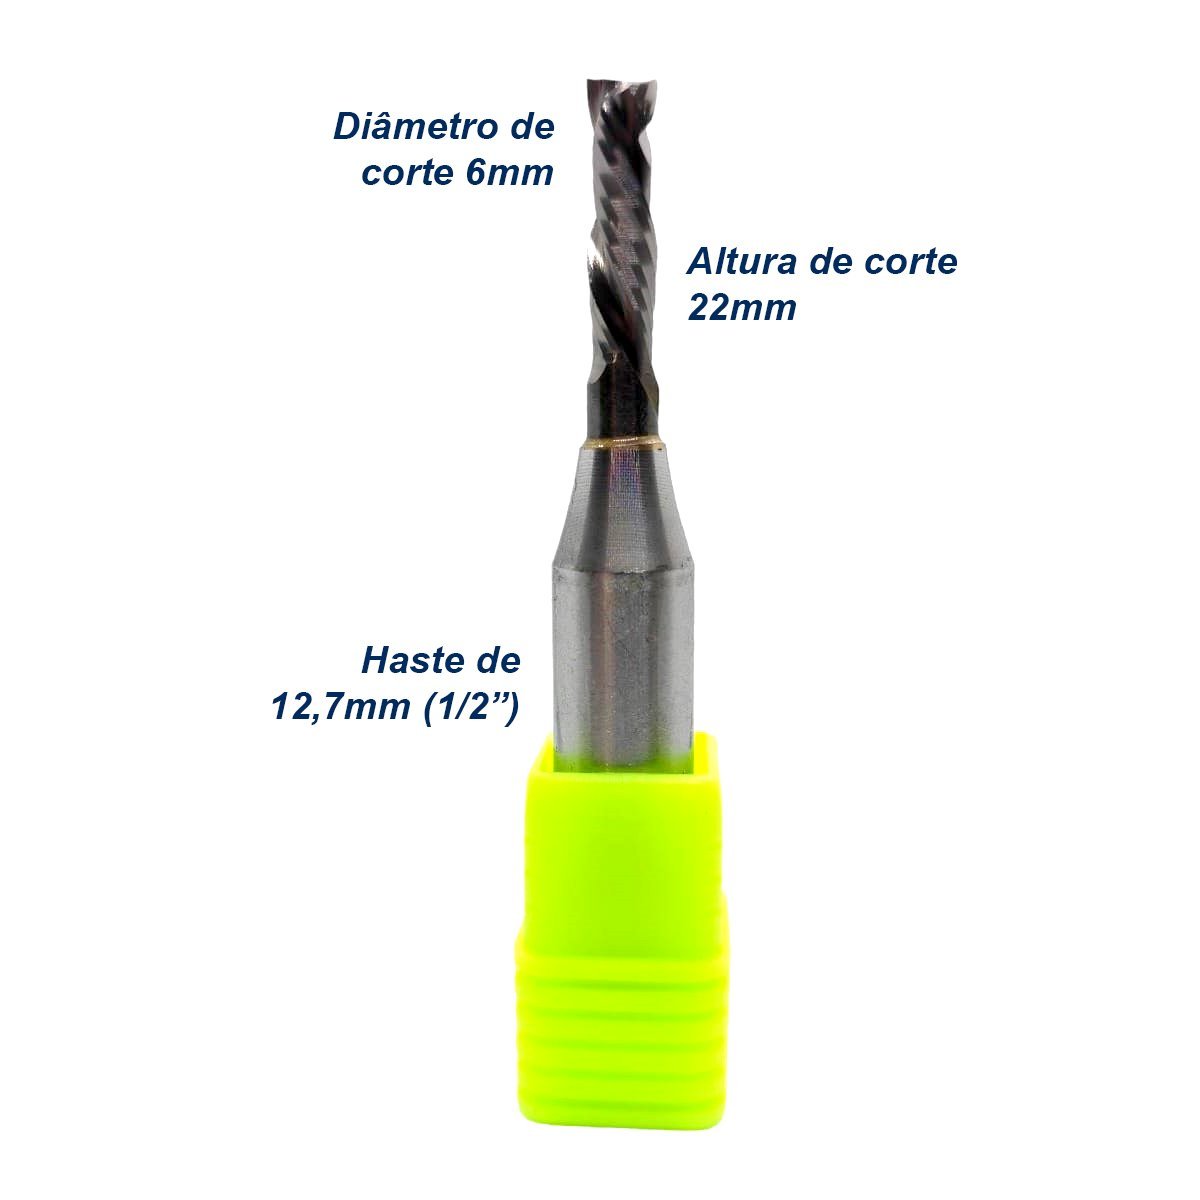 Fresa Topo 2 Cortes UPDowncut haste 12,7mm - Ø6X22mm MDF laminado CNCFRESAS UPDOWNCUT / UP-DOWNCUT - 2